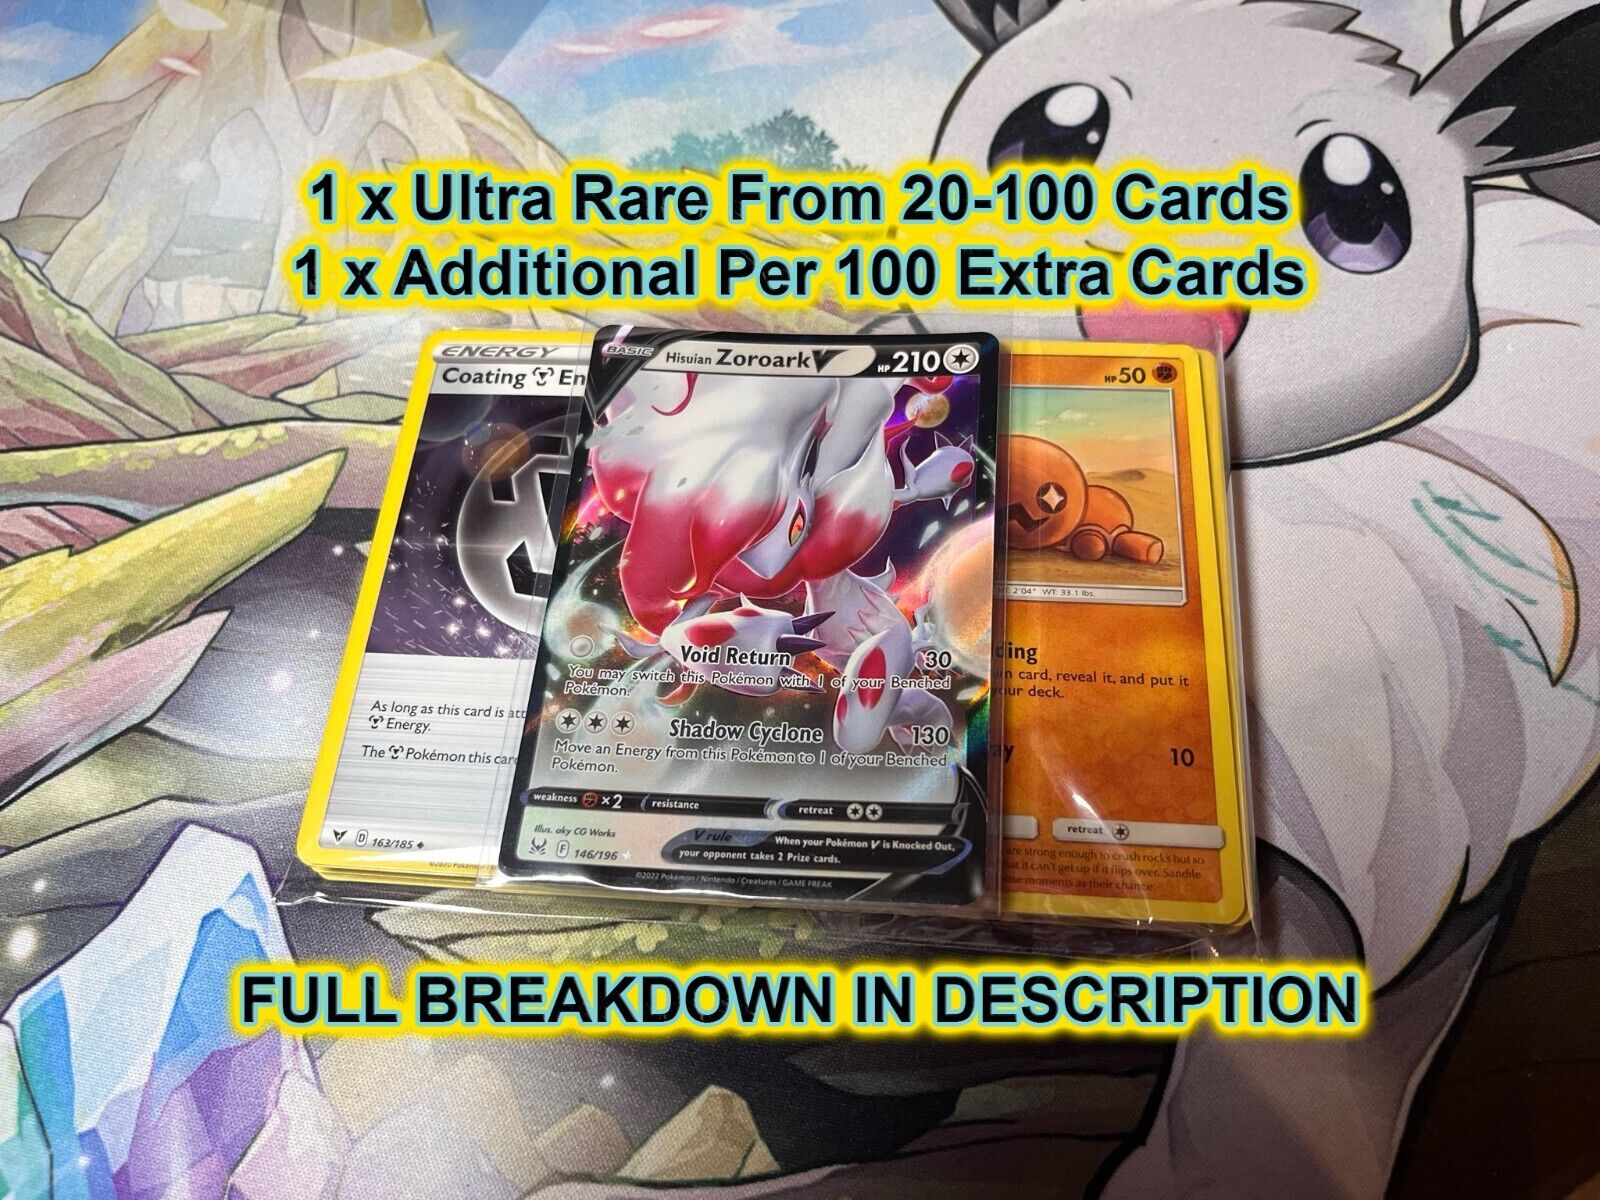 Genuine Pokemon Cards Joblot Bundle Including Ultra Rares, V's, VMAX, EX, GX